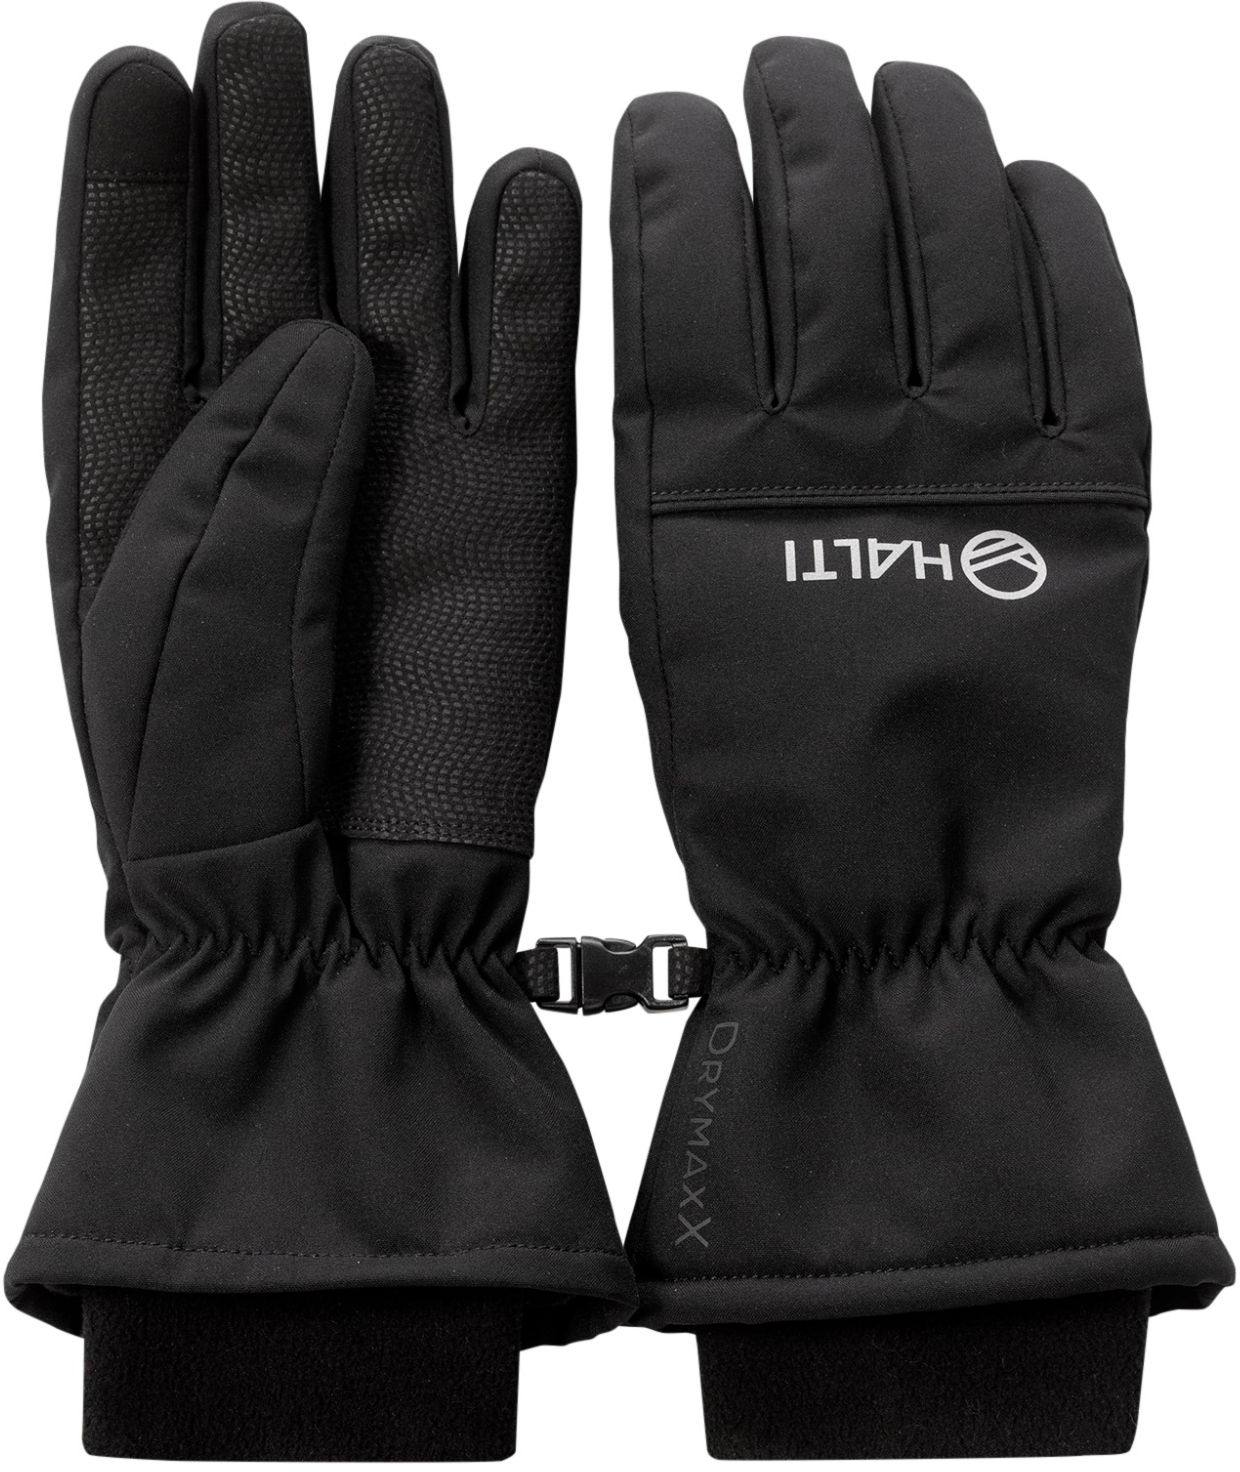 Halti Alium DX Gloves Black S